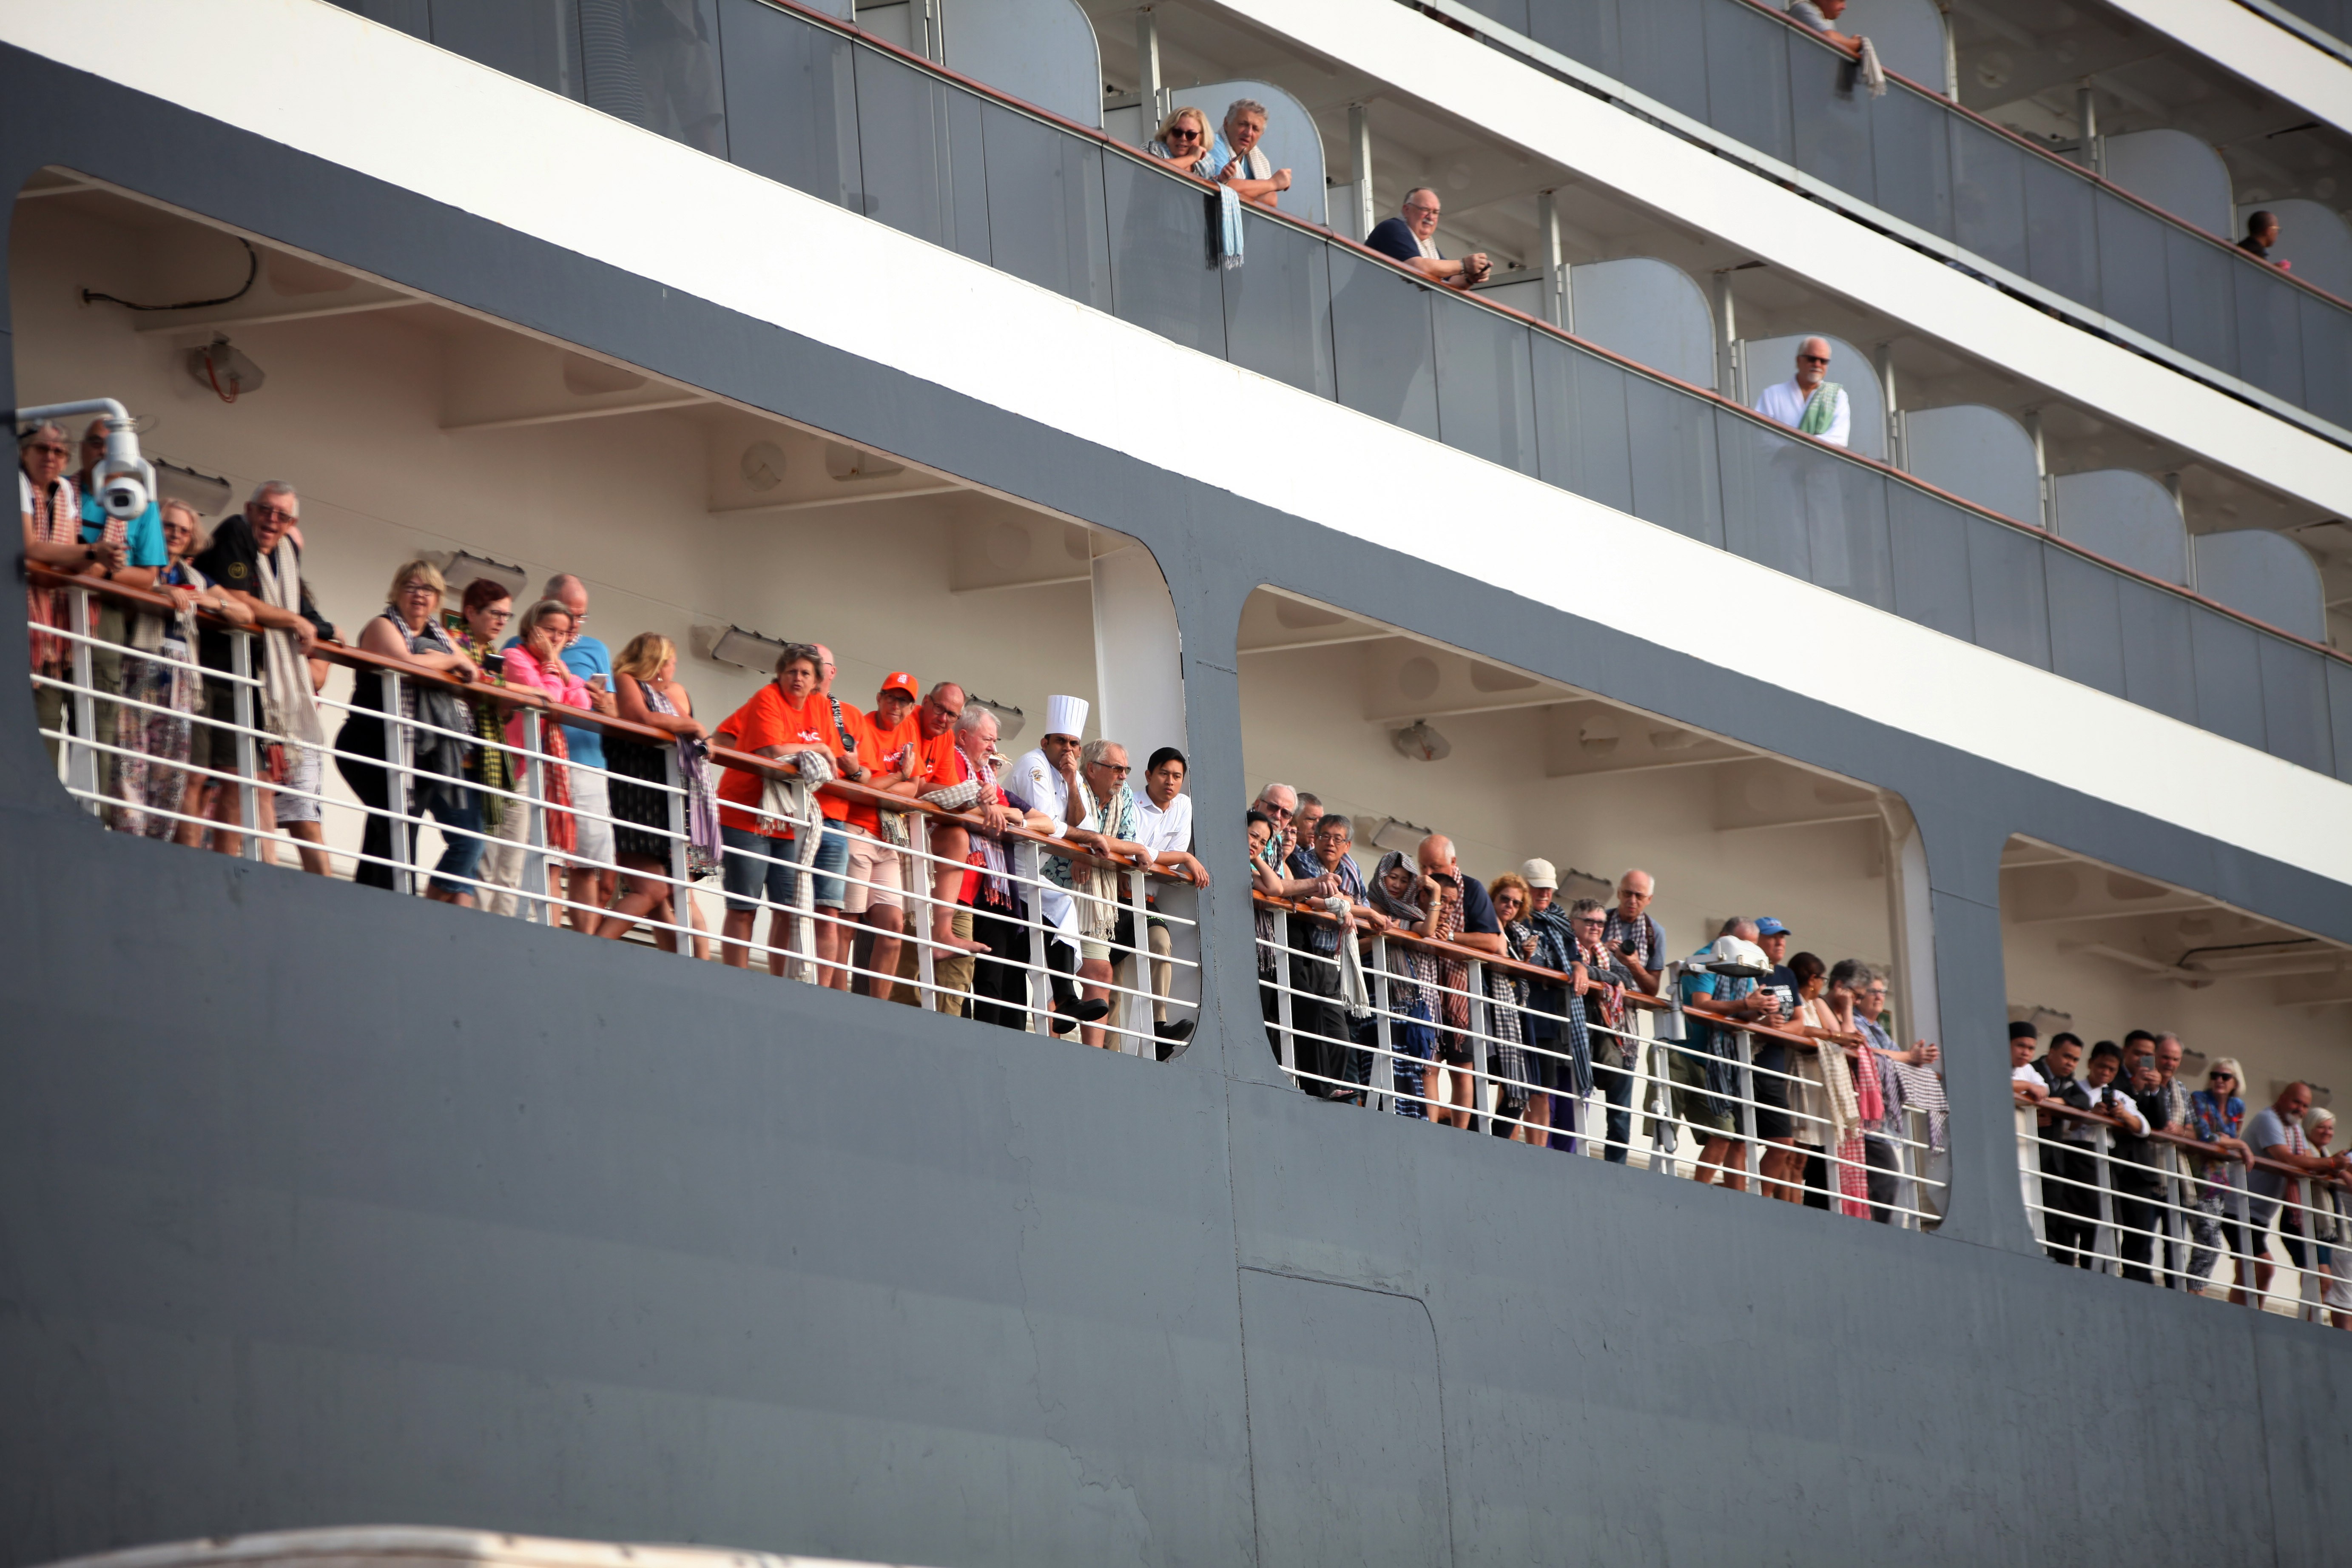 Passengers gather on decks of the Westerdam cruise ship before disembarking on February 14, 2020, in Cambodia. Photo: Xinhua